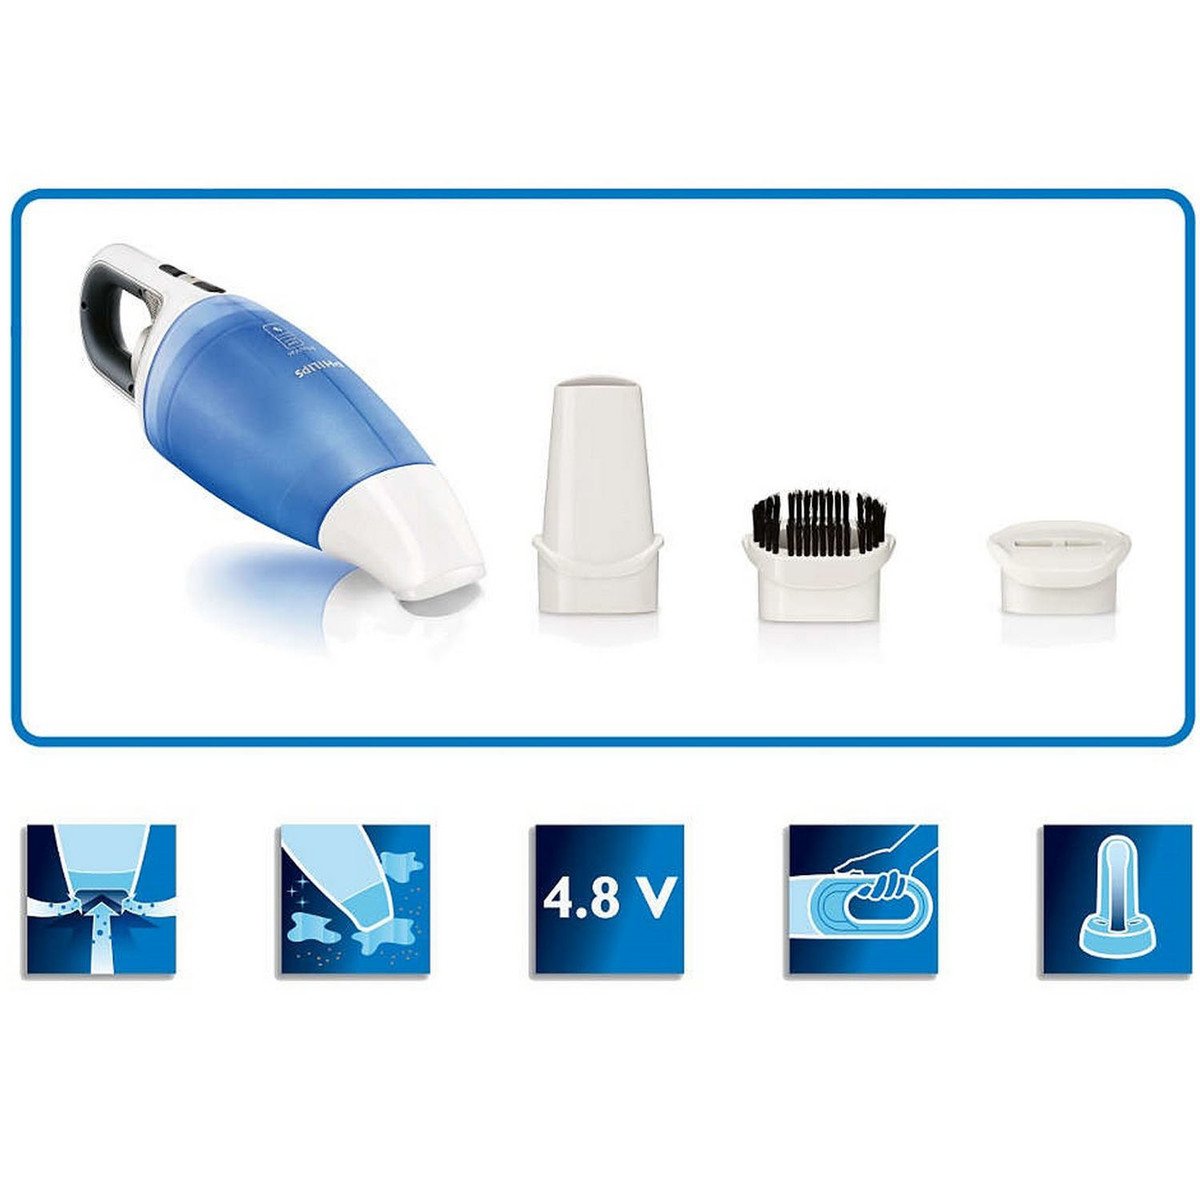 Philips Handheld Wet&Dry Vacuum Cleaner FC6142/60   